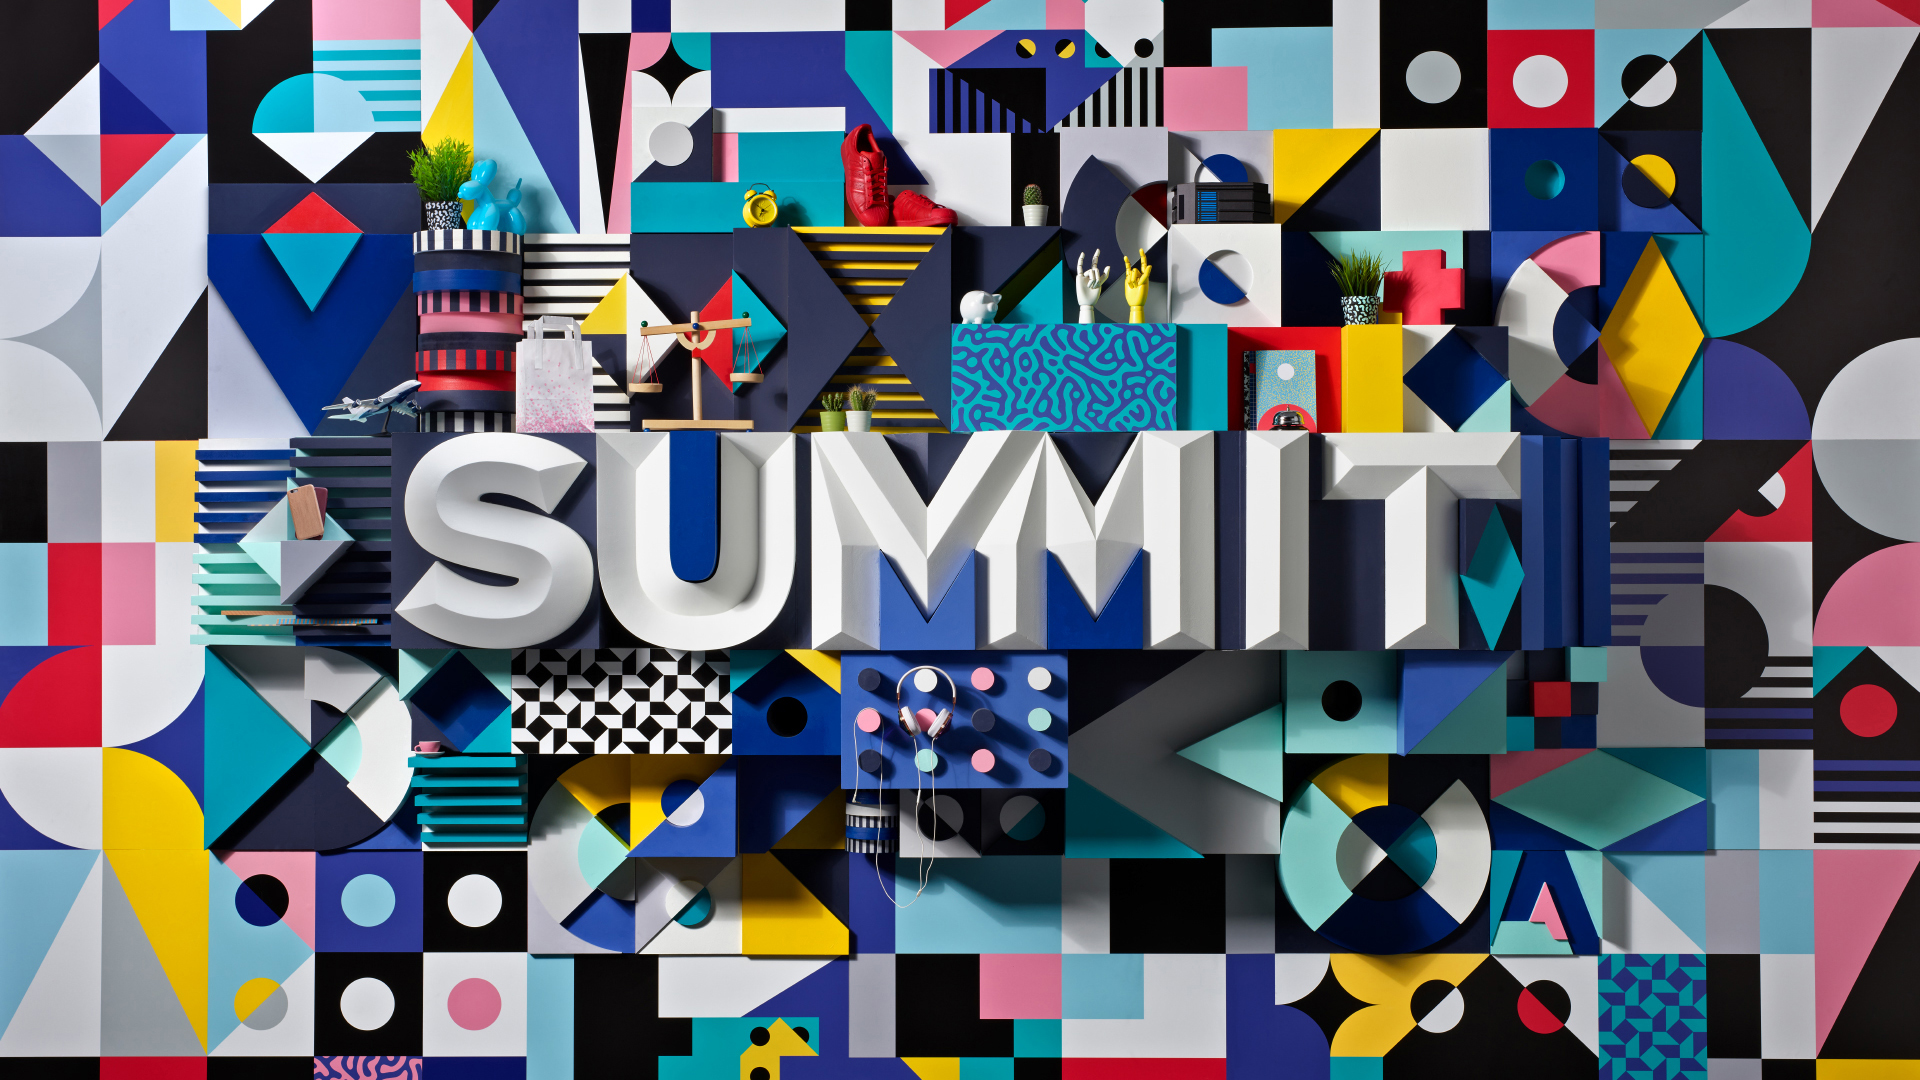 Art Installation of Adobe's Summit Identity